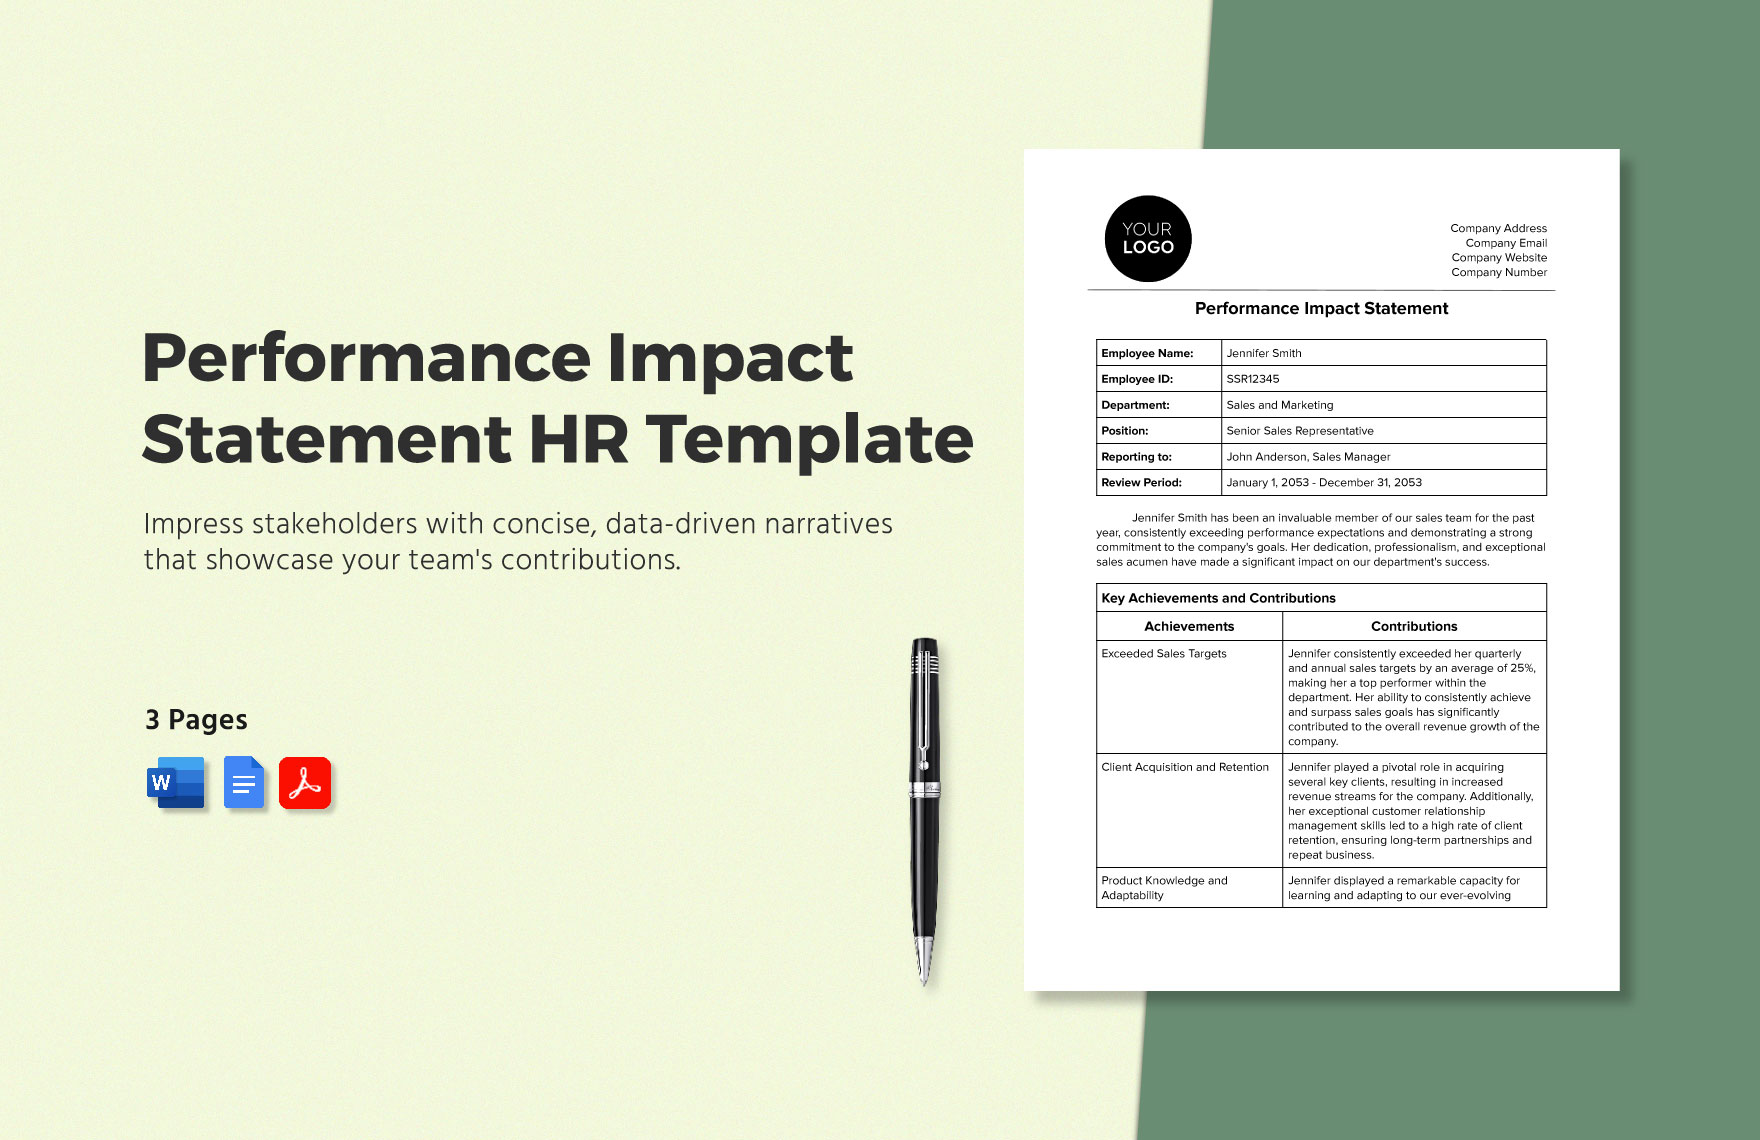 Performance Impact Statement HR Template